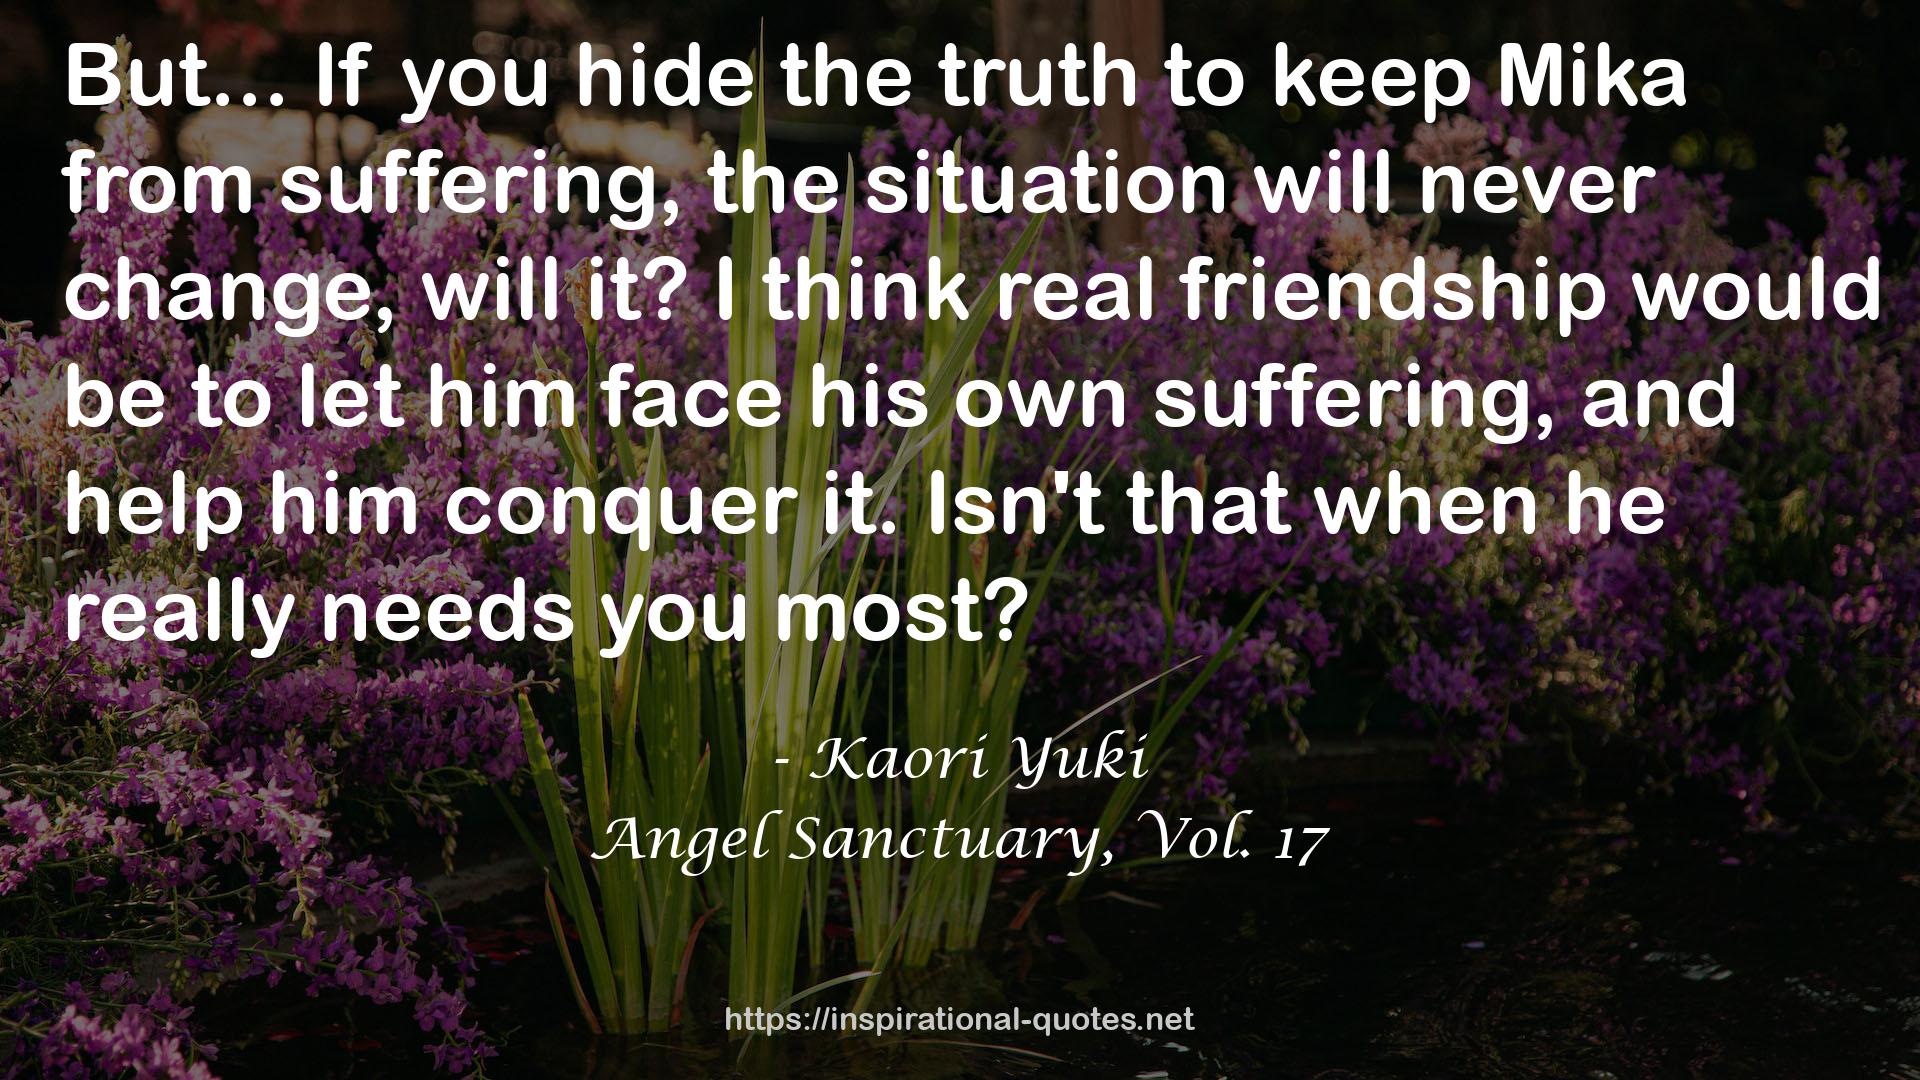 Angel Sanctuary, Vol. 17 QUOTES